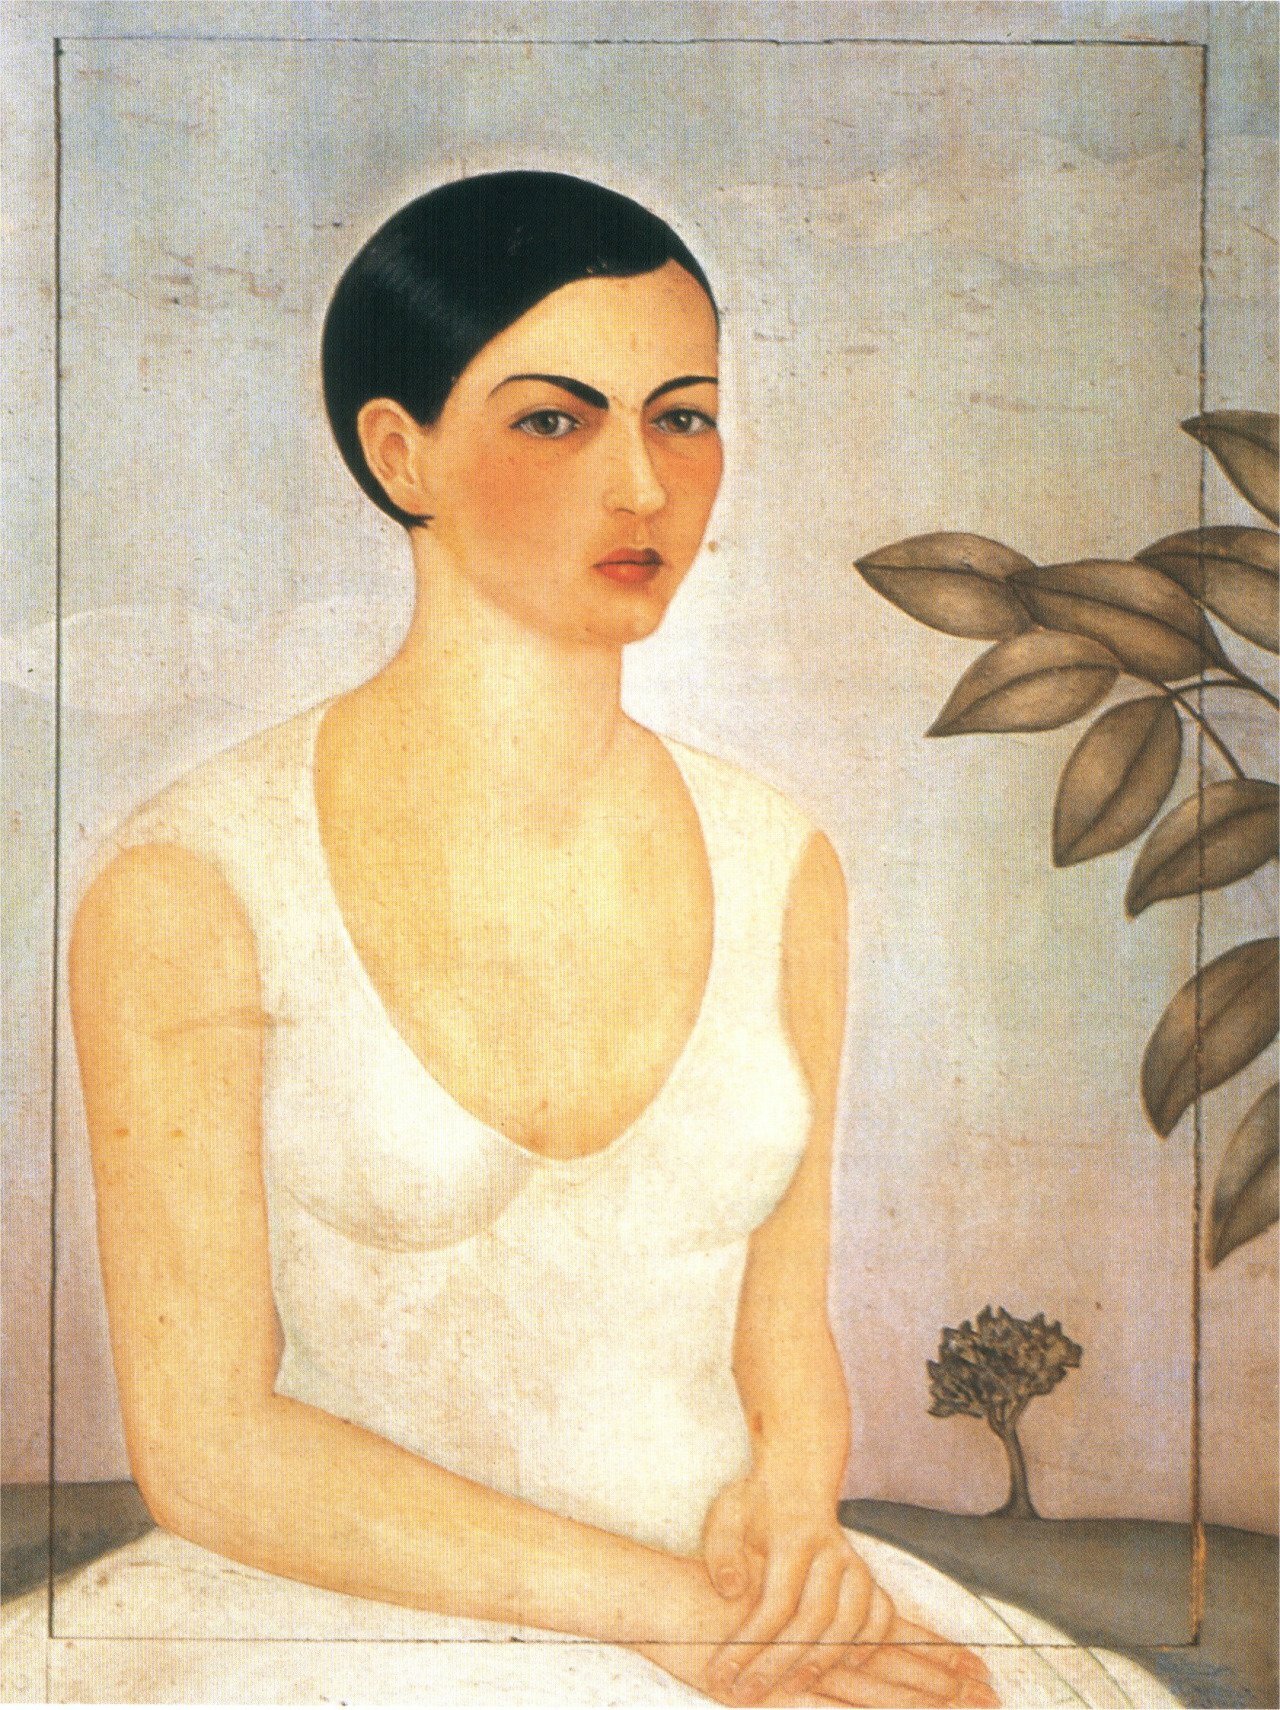 RT @womensart1: Frida Kahlo (Mexican, 1907-1954), Portrait of Cristina my sister, 1928 #womensart https://t.co/aum31aoiIr